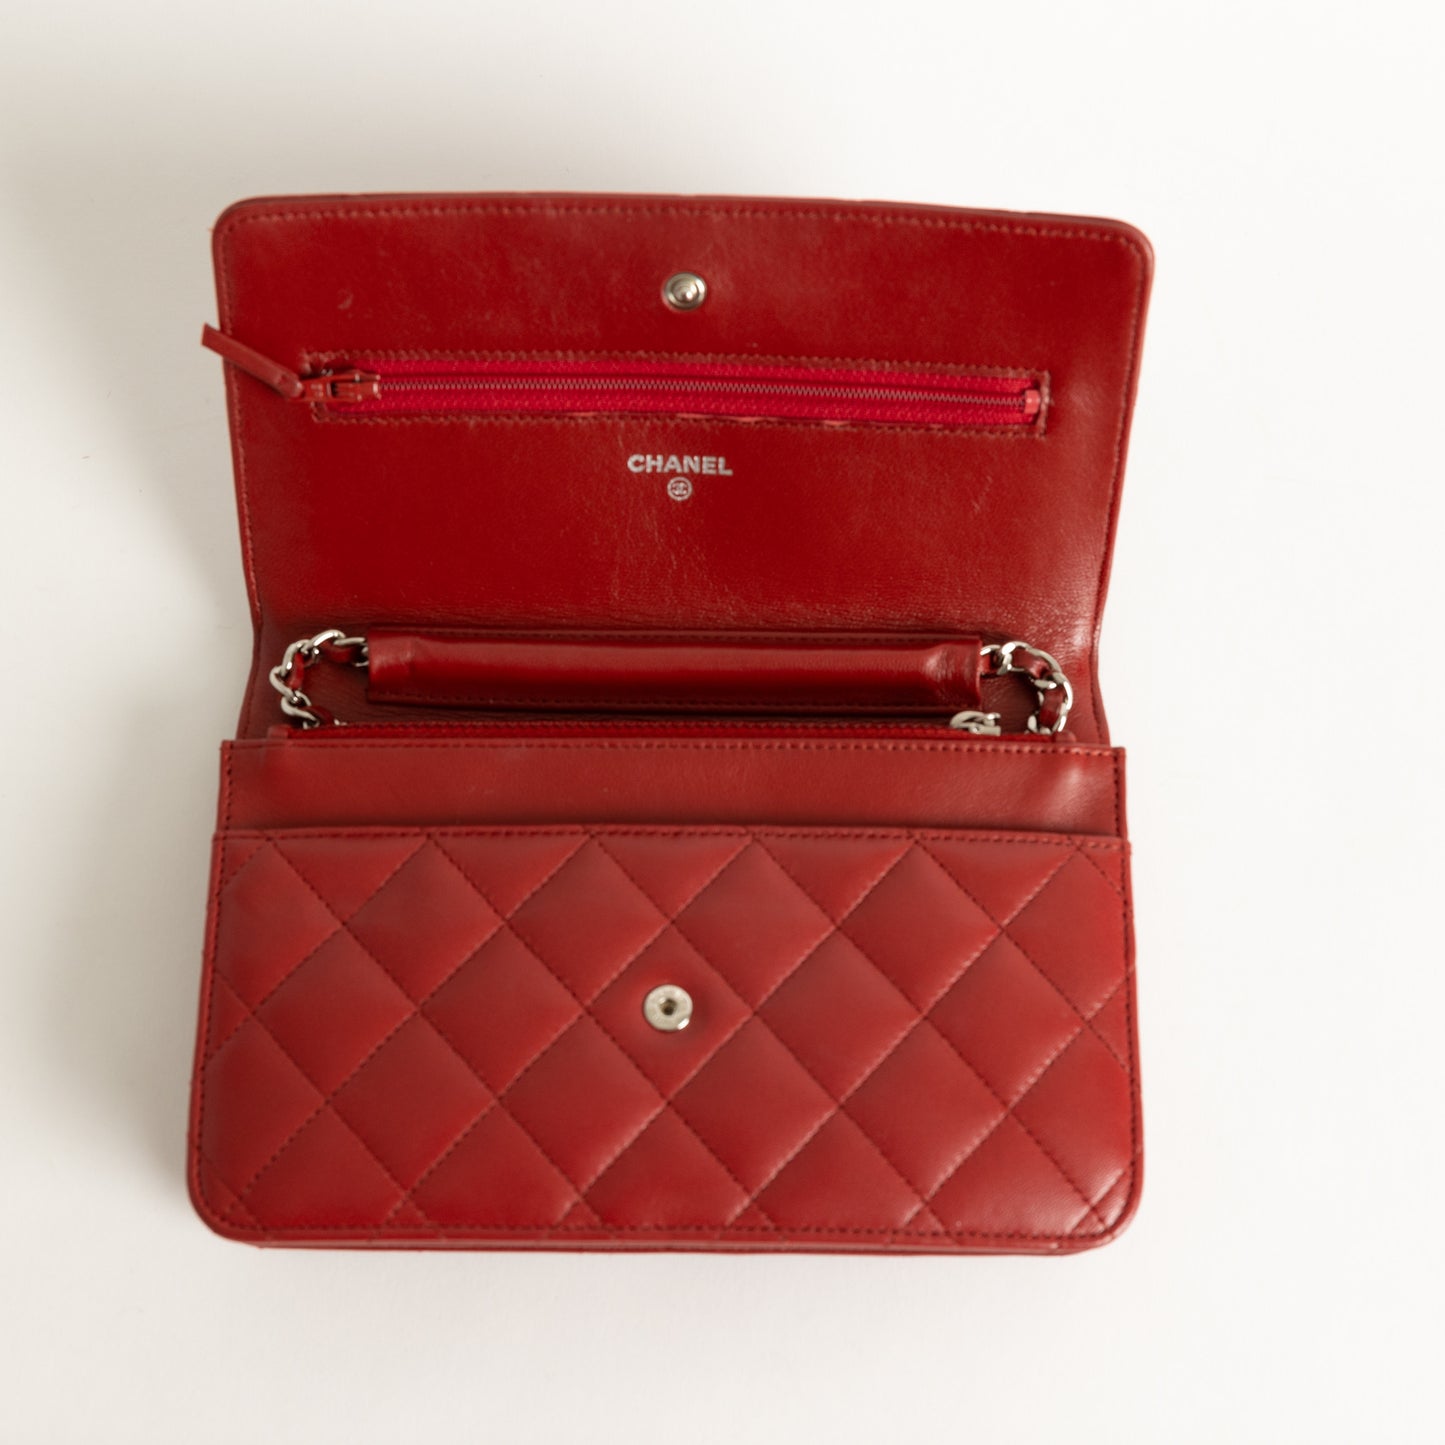 Chanel Wallet on Chain, Red Lambskin